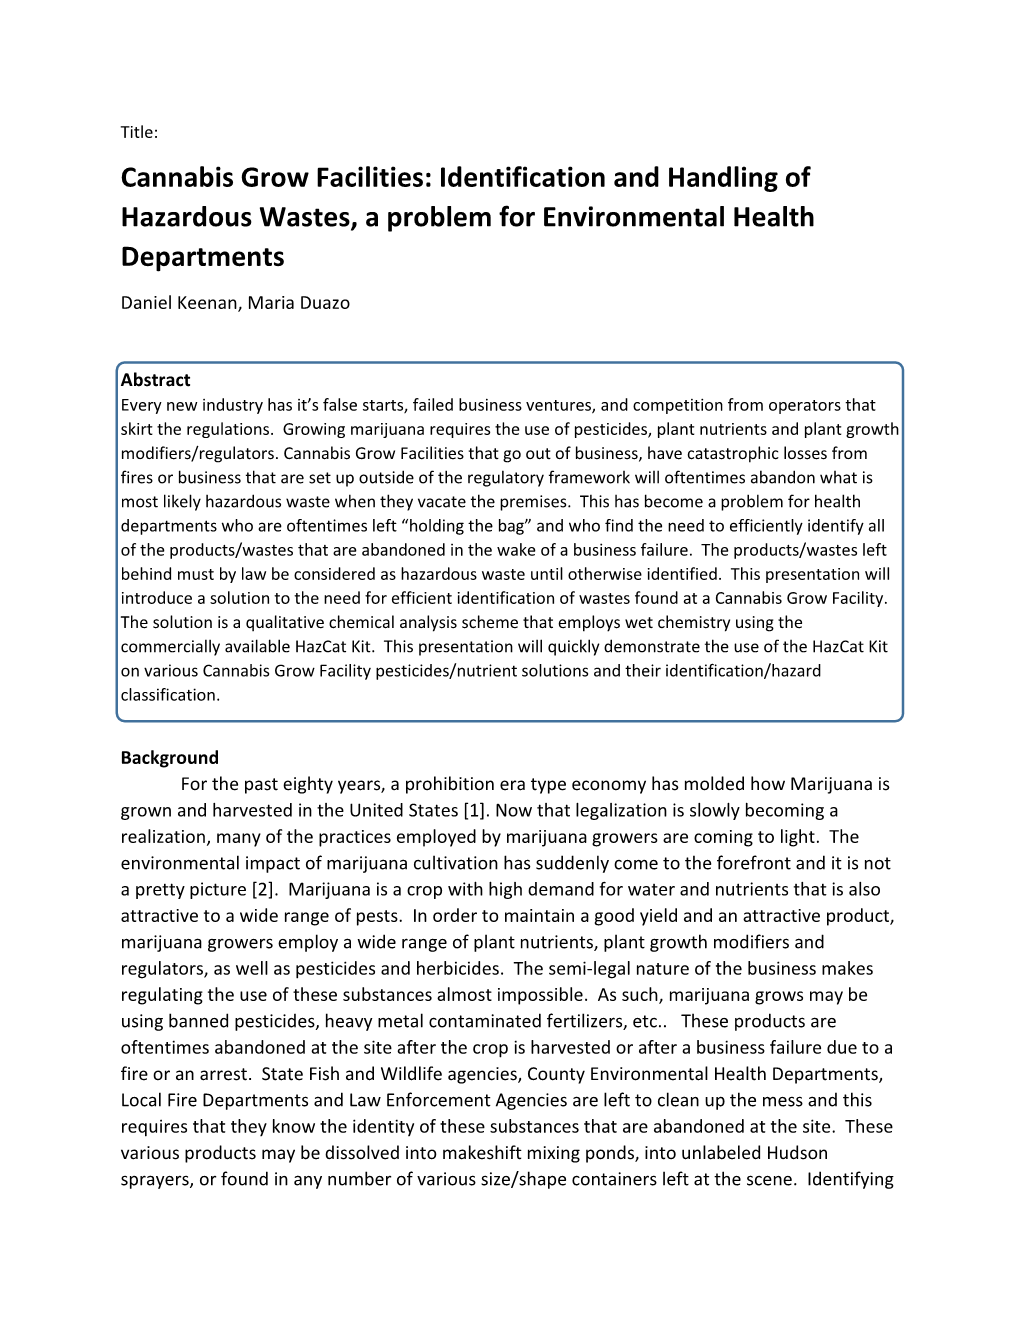 Cannabis Grow Facilities: Identification and Handling of Hazardous Wastes, a Problem for Environmental Health Departments Daniel Keenan, Maria Duazo